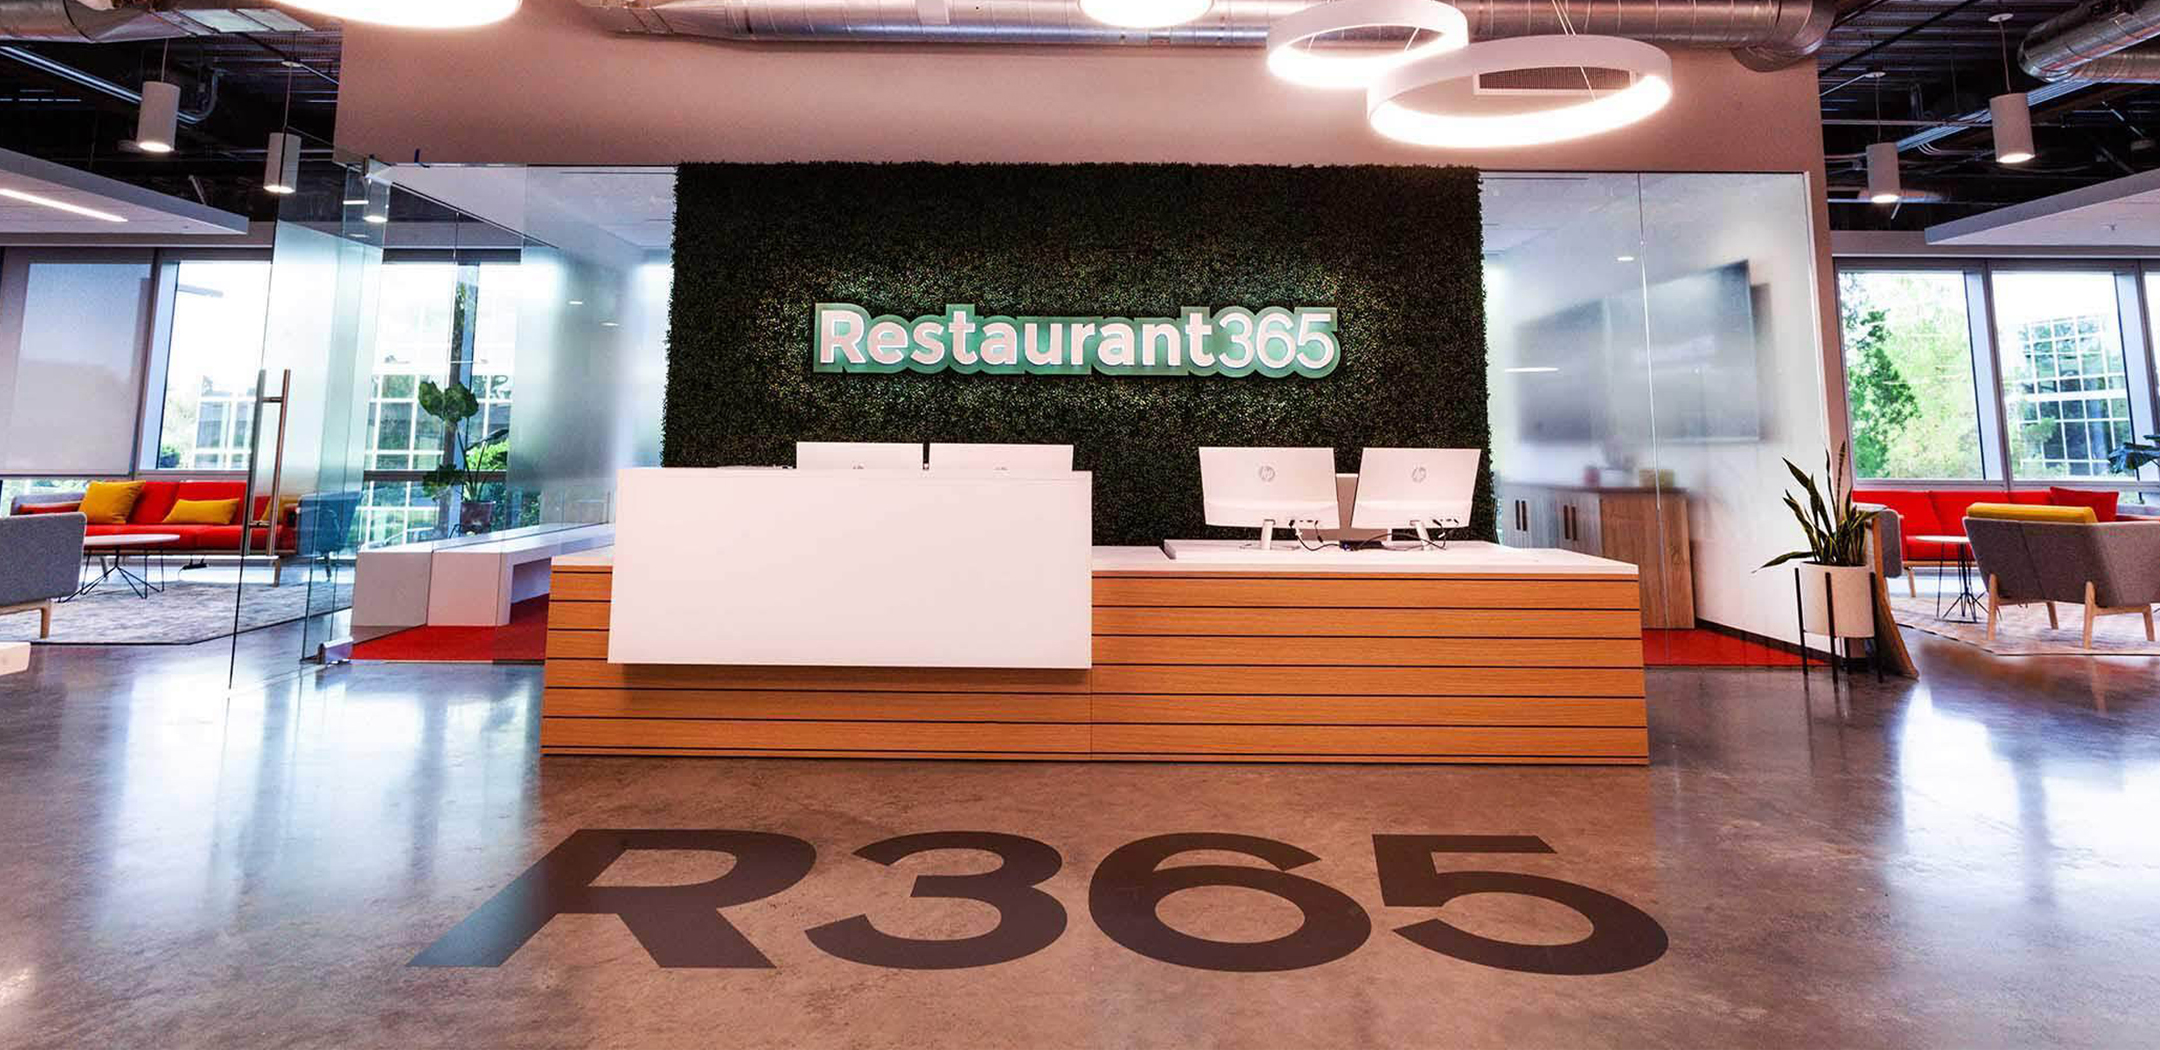 Restaurant365 2019